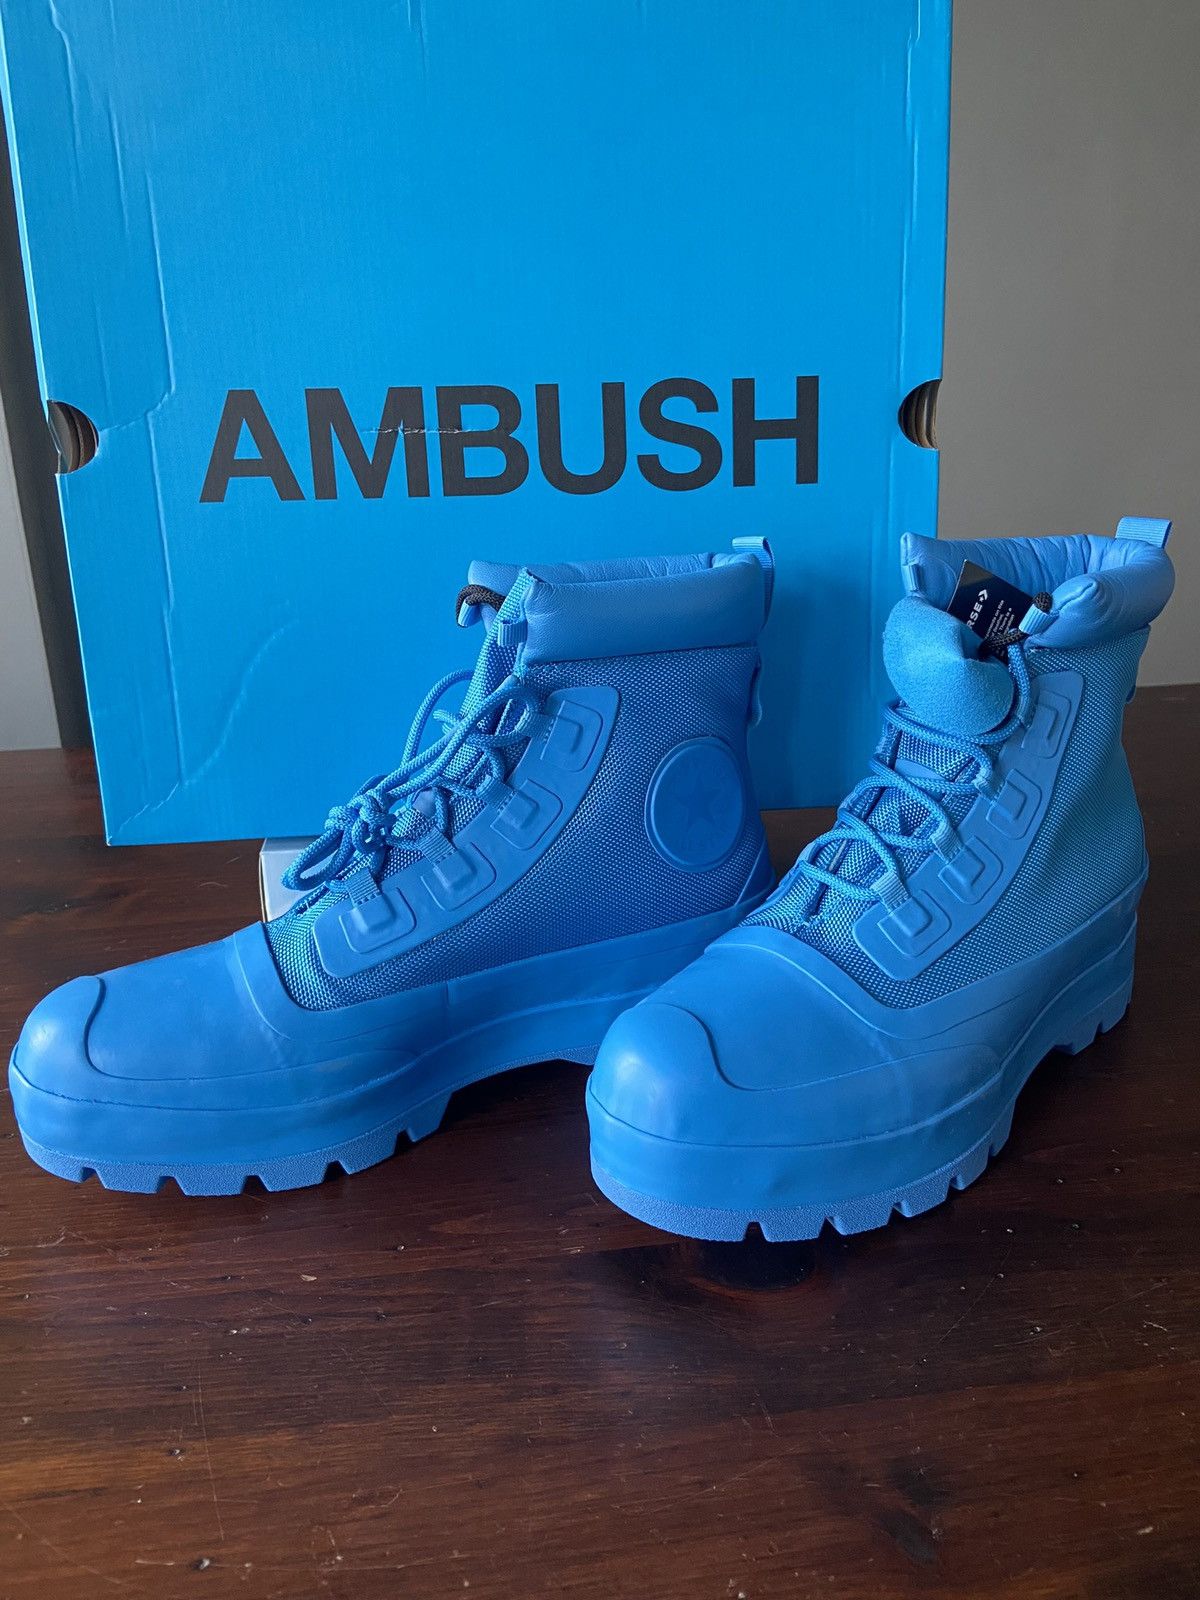 Converse Ambush x Converse Blue All-Star Duck Boots | Grailed